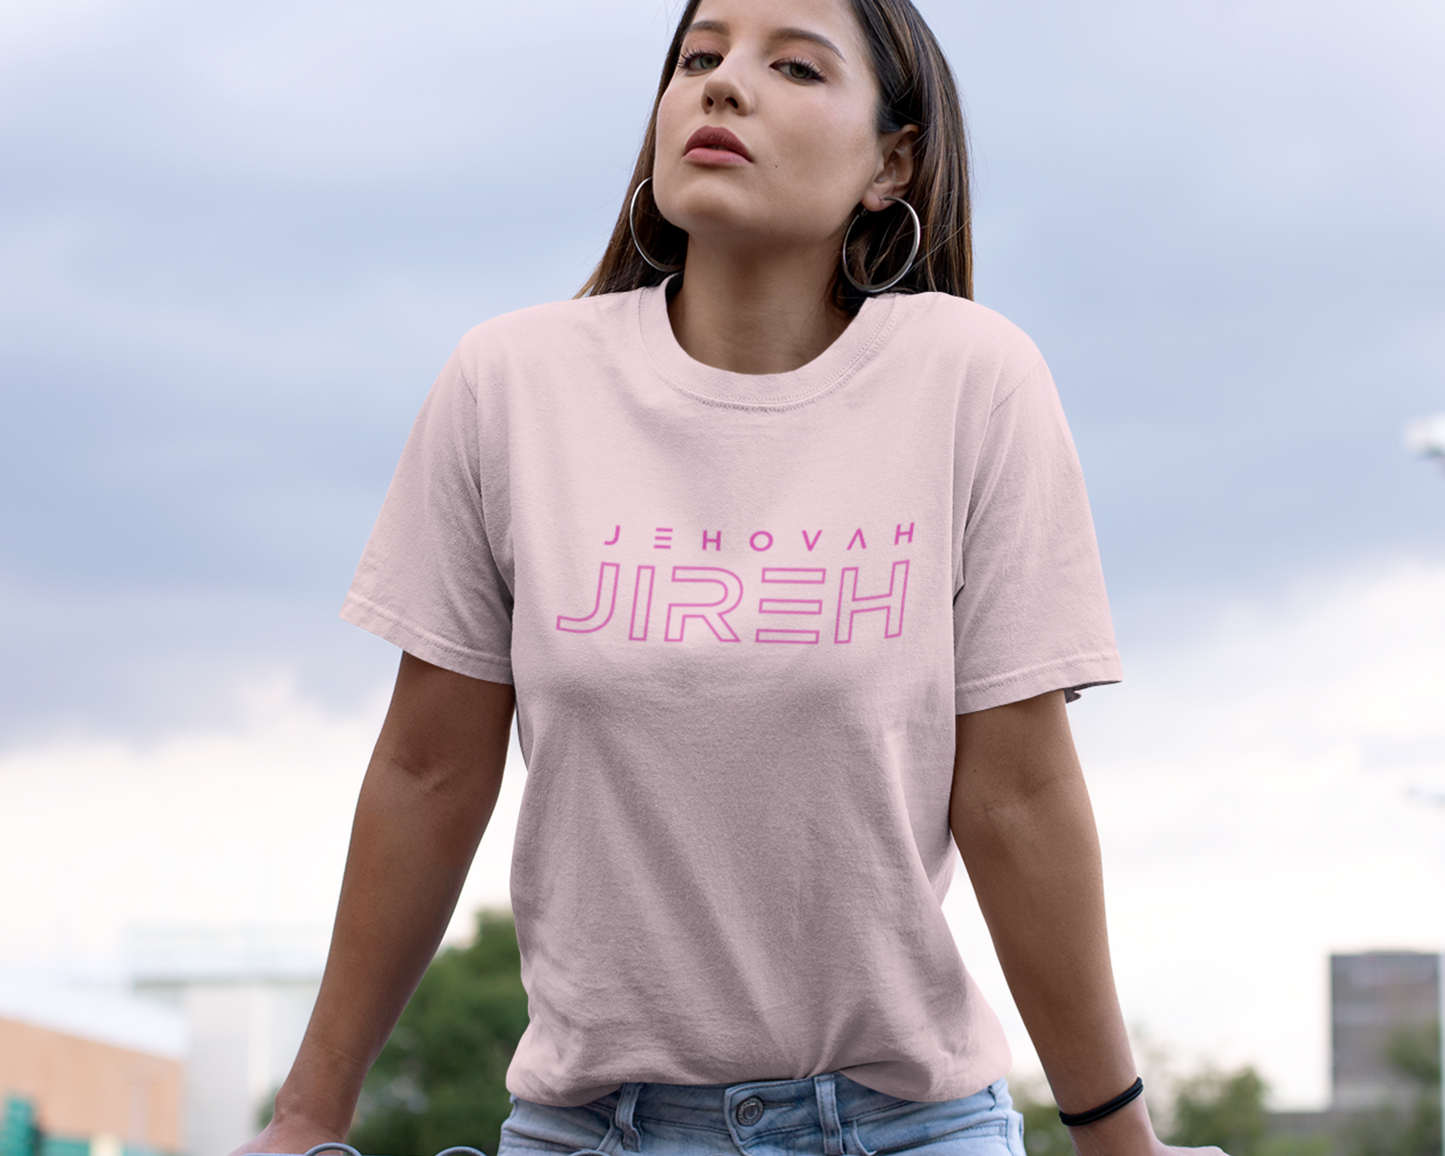 Jehovah Jireh Christian T-Shirt For Women